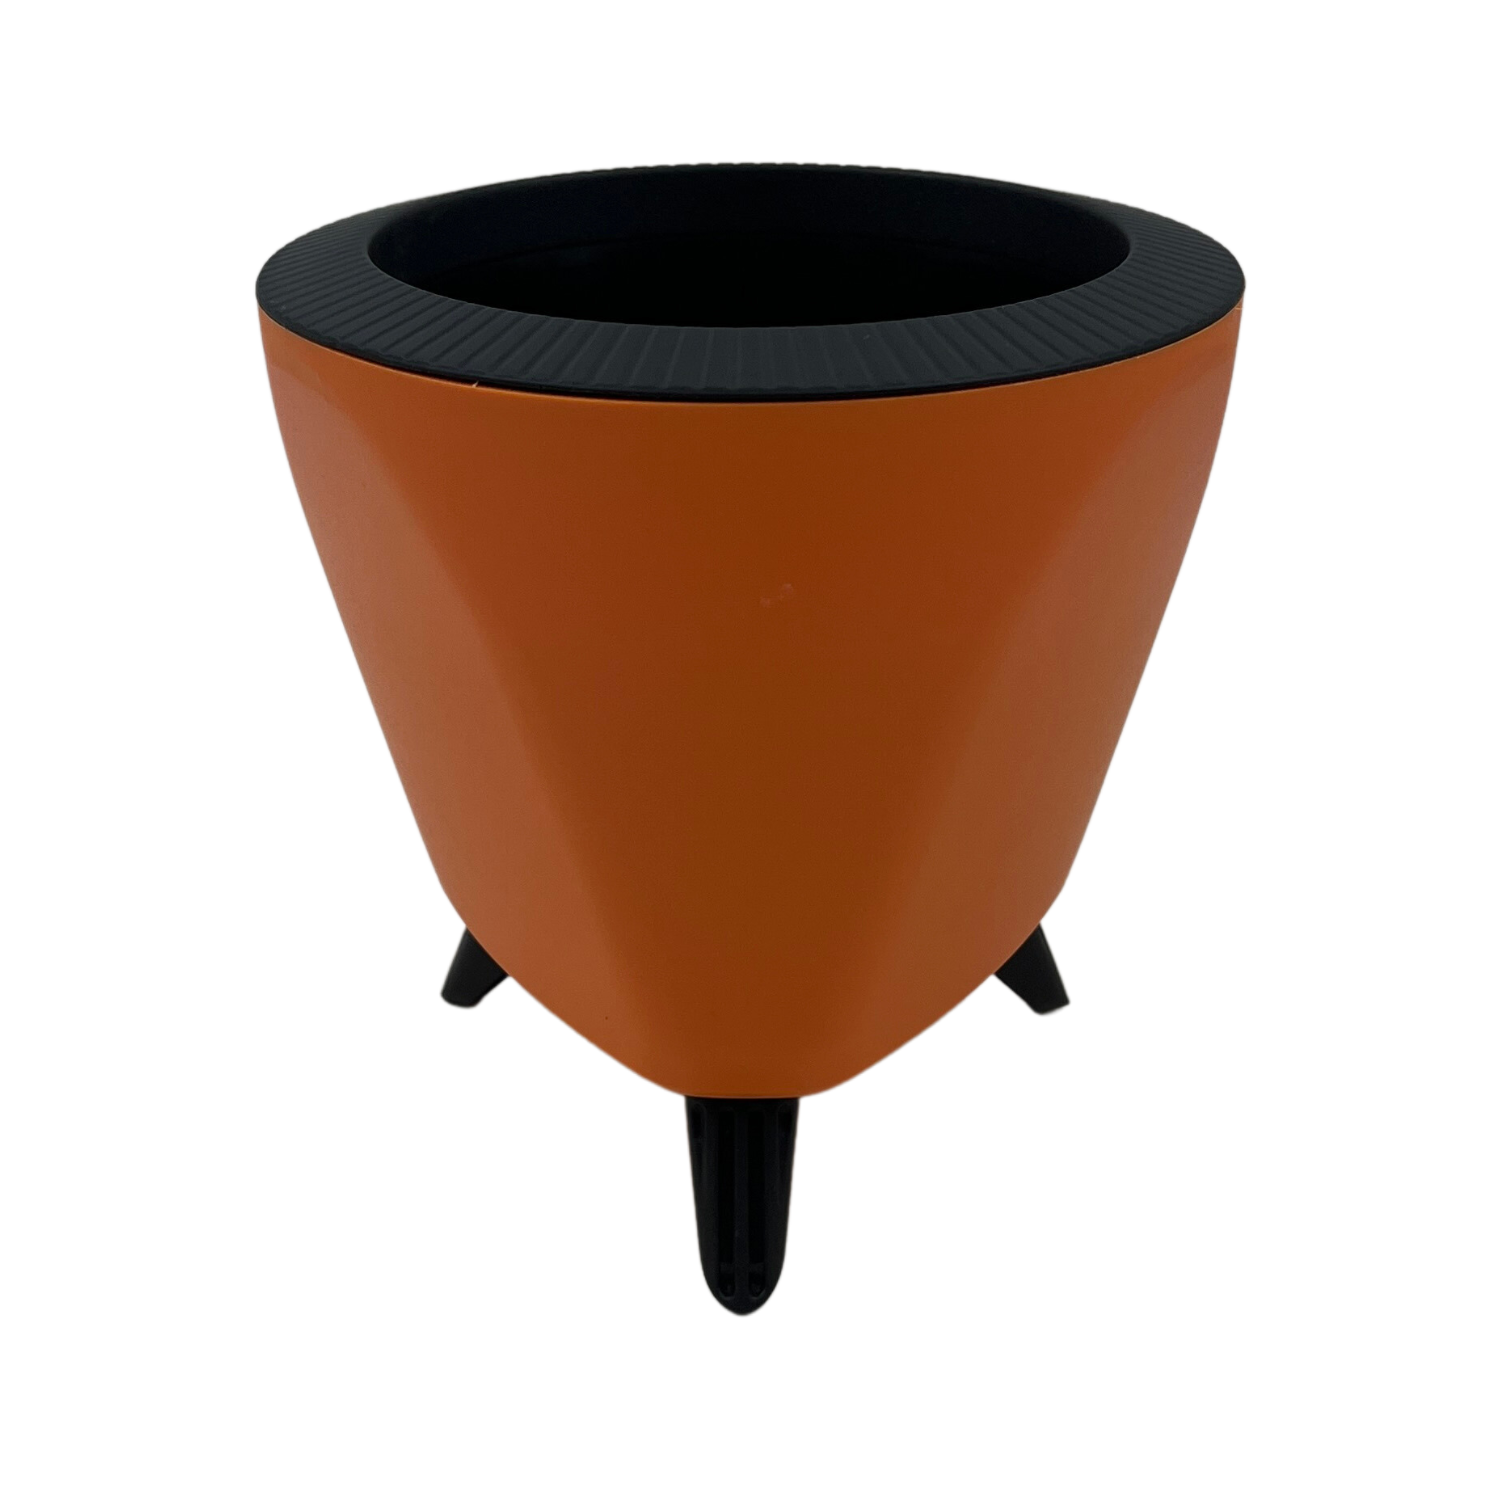 Lagos 13cm Round Plastic Pot for Home & Garden Decor